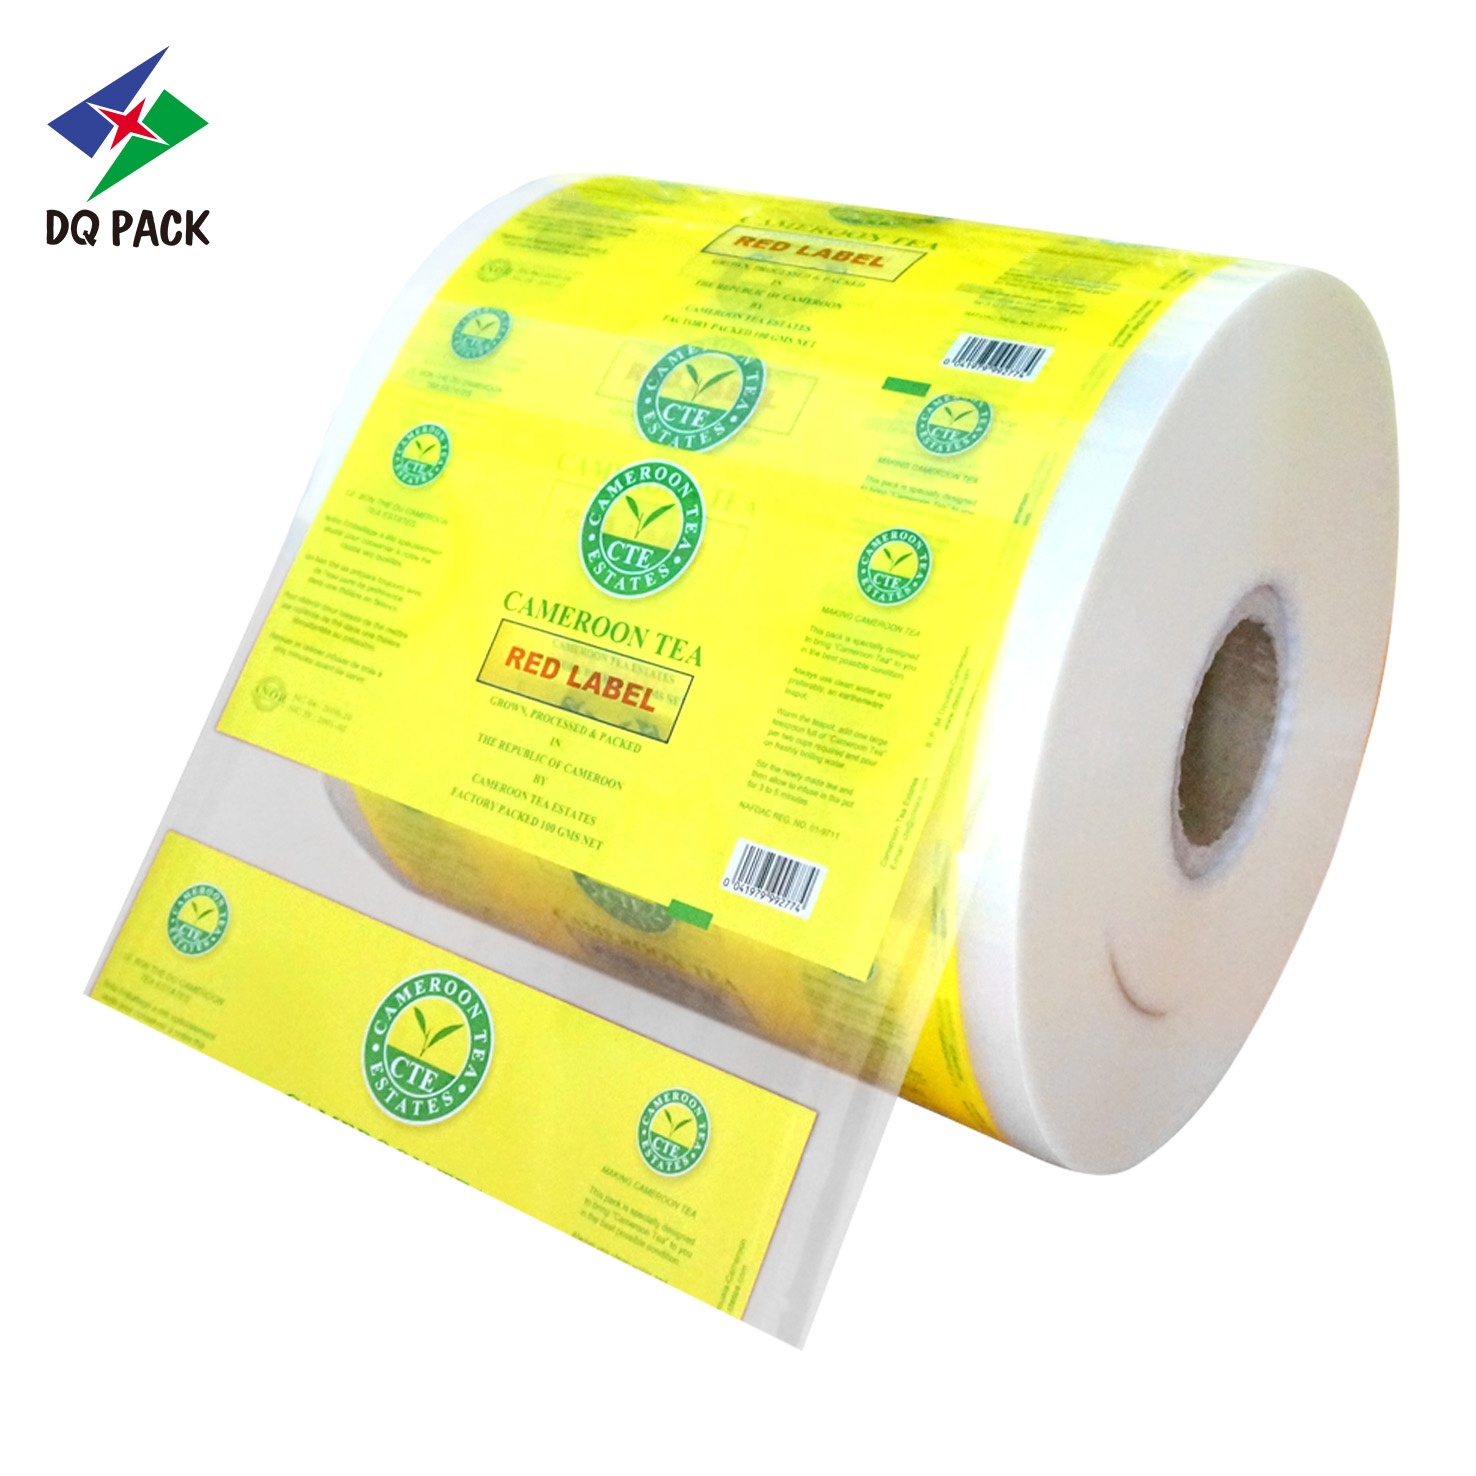 DQ PACK Tea Packaging Transparent Plastic Film Customized Laminated Material Printed Film Roll